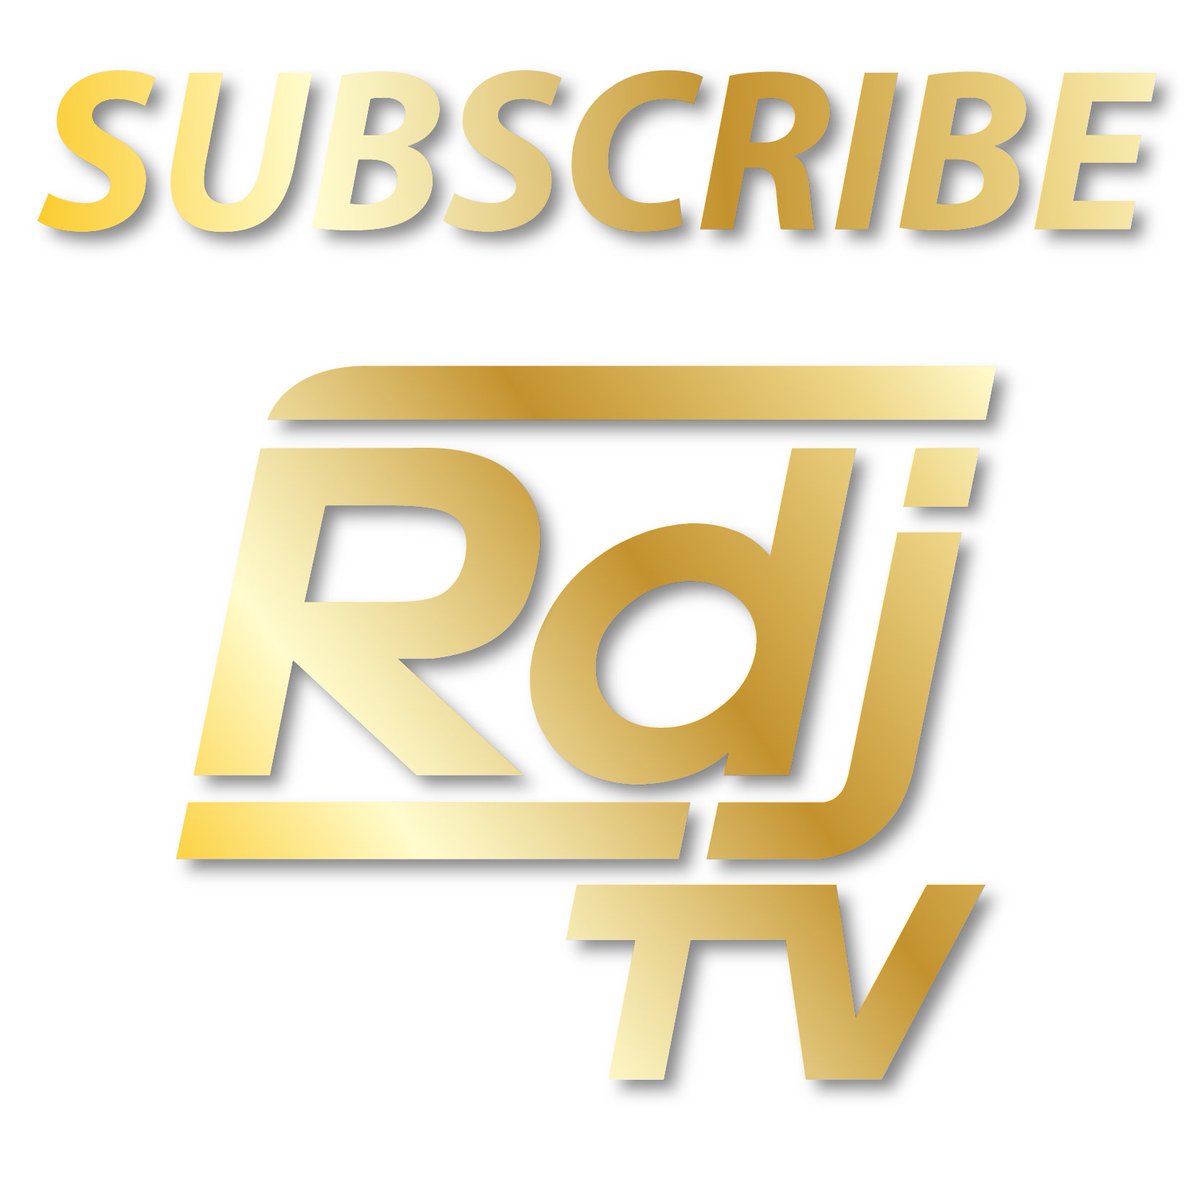 RDJTV RABUGAUL 2 - ROMMY youtu.be/KtbZpbOr5lo via @YouTube  w/@rommy_wardhana & @room_4music

#rdjtv #room4music #rabugaul #rdjindonesia #djlivestreaming #progressive #djplaylist2021 #djmix